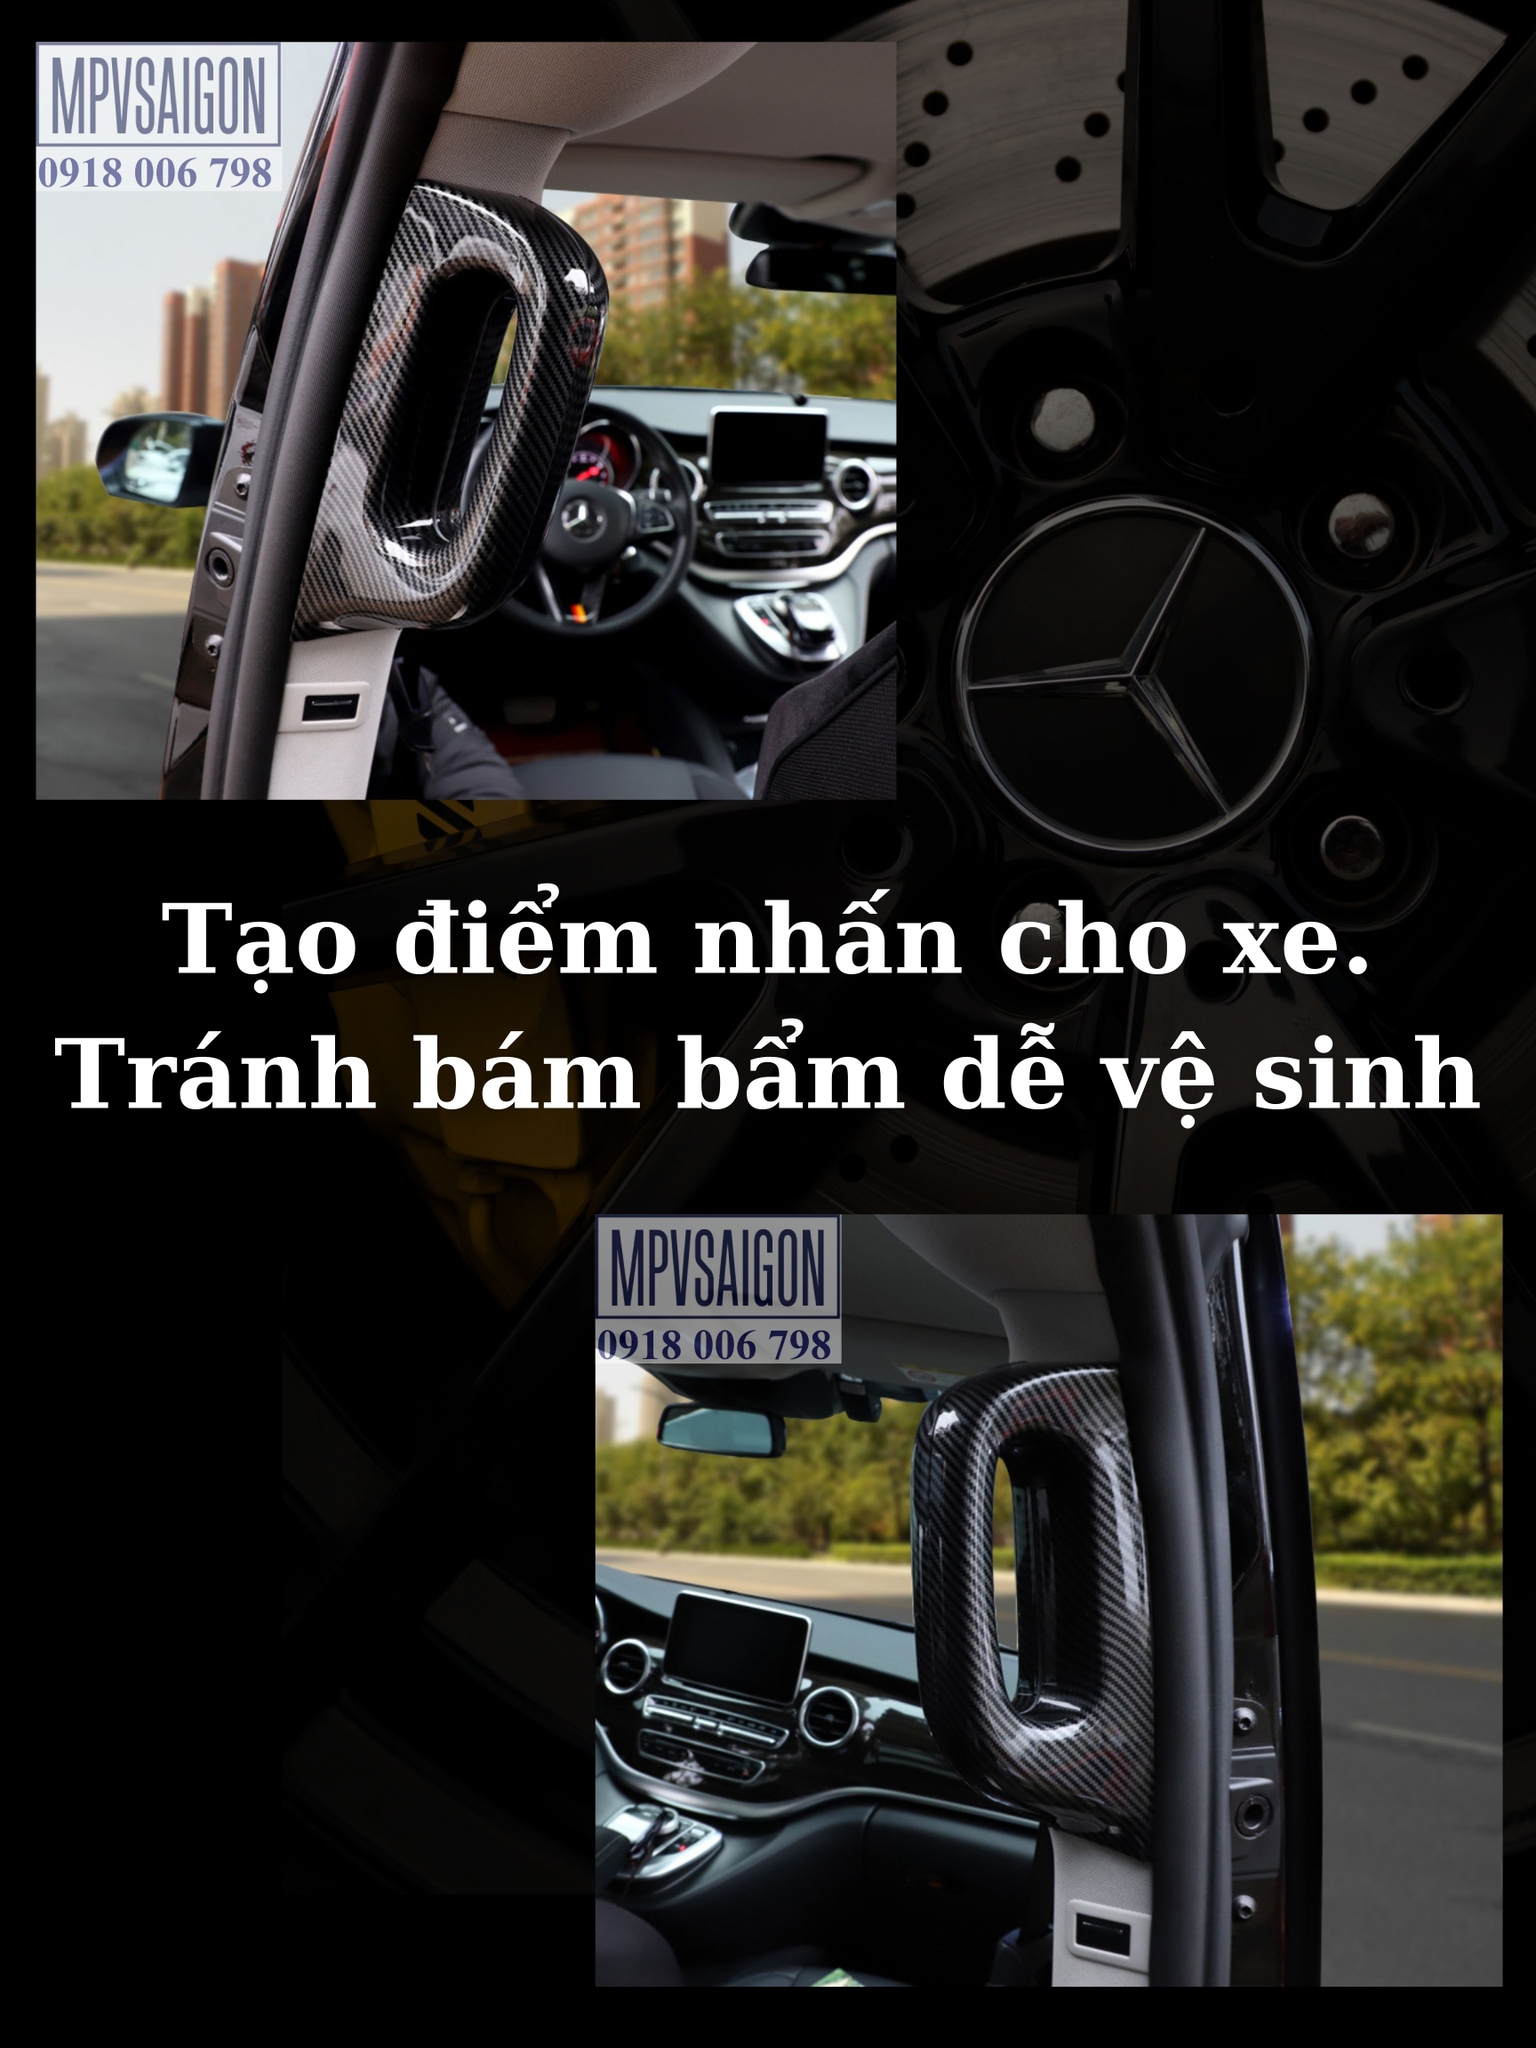 Ốp tay cửa ốp che dây an toàn Mercedes Benz V250 - Vito